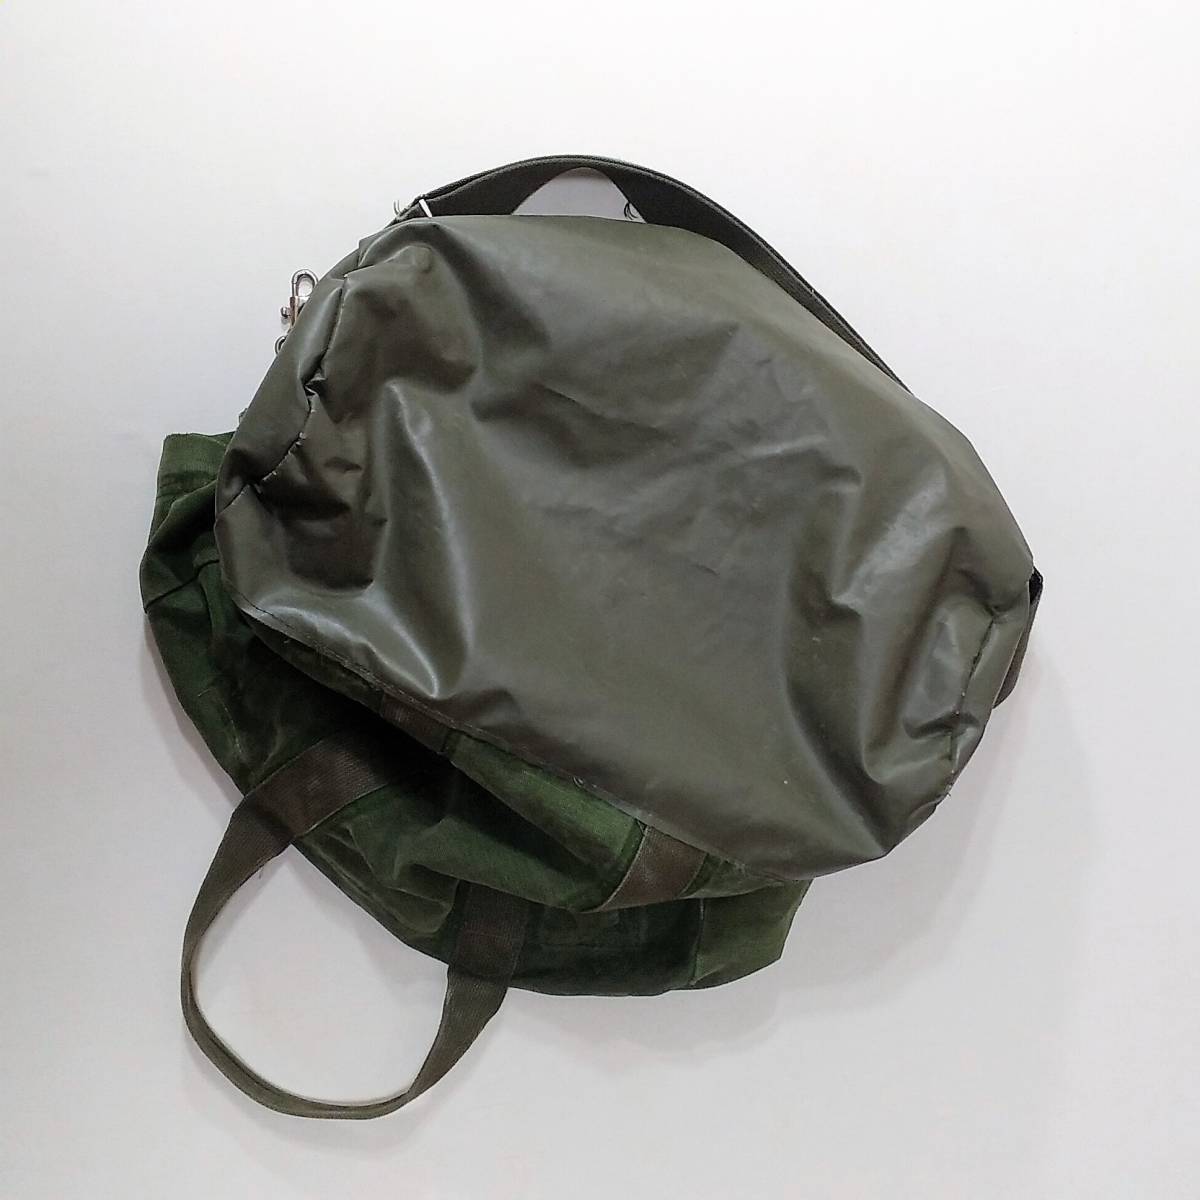 Vintage Sweden travel bag helmet bag スウェーデンミリタリーusarmy navy airforce 大戦 ベトナム 真珠湾_画像3